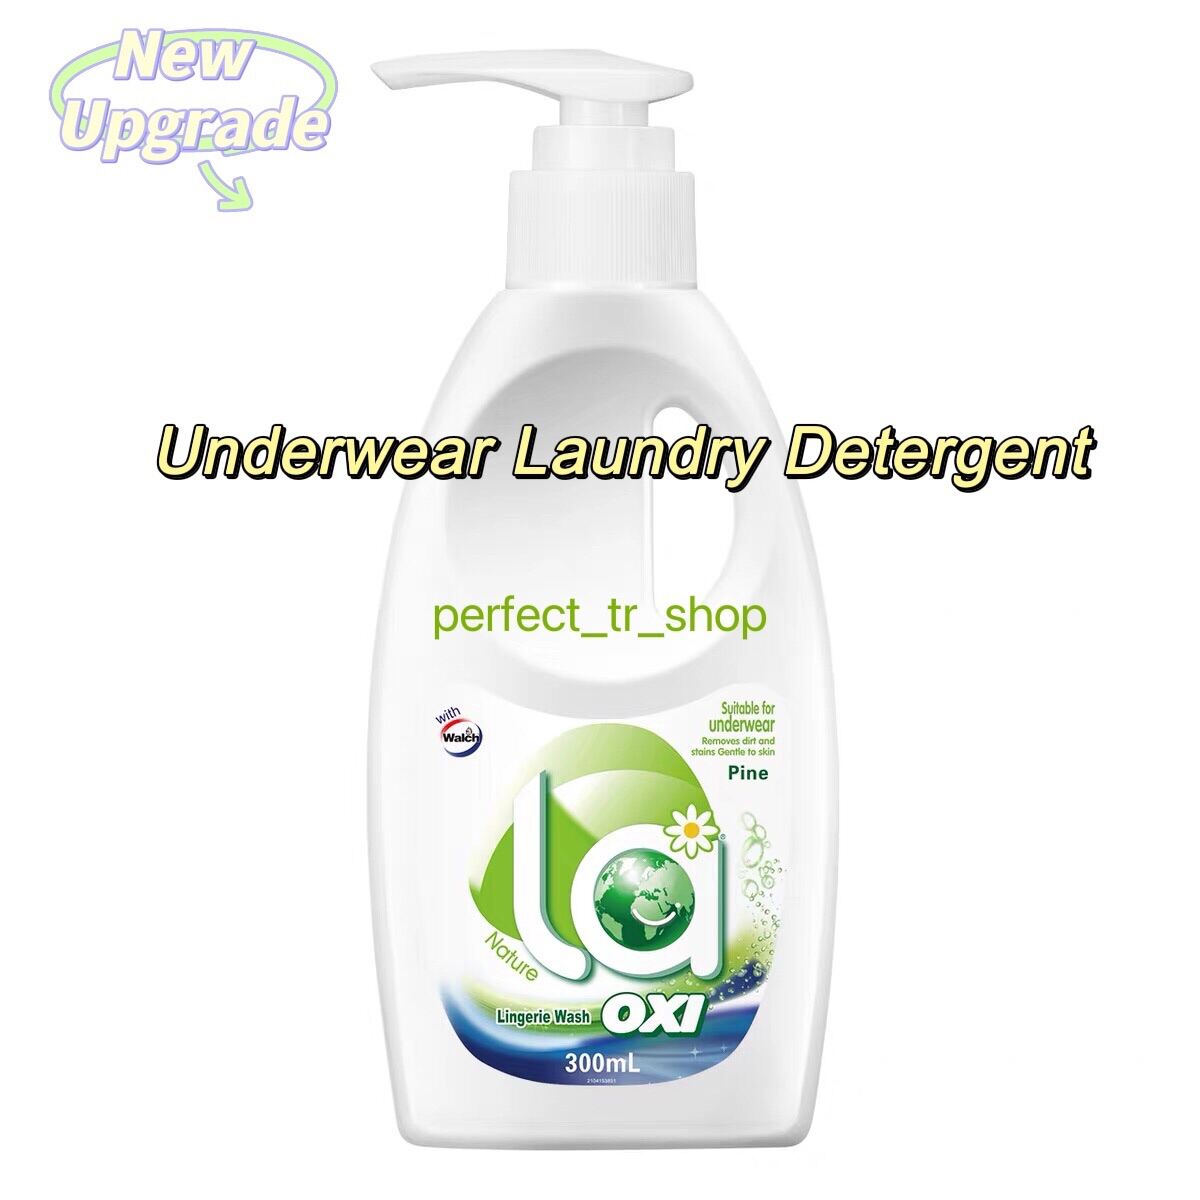 Shibarcle Underwear Laundry Detergent - Gentle & Malaysia